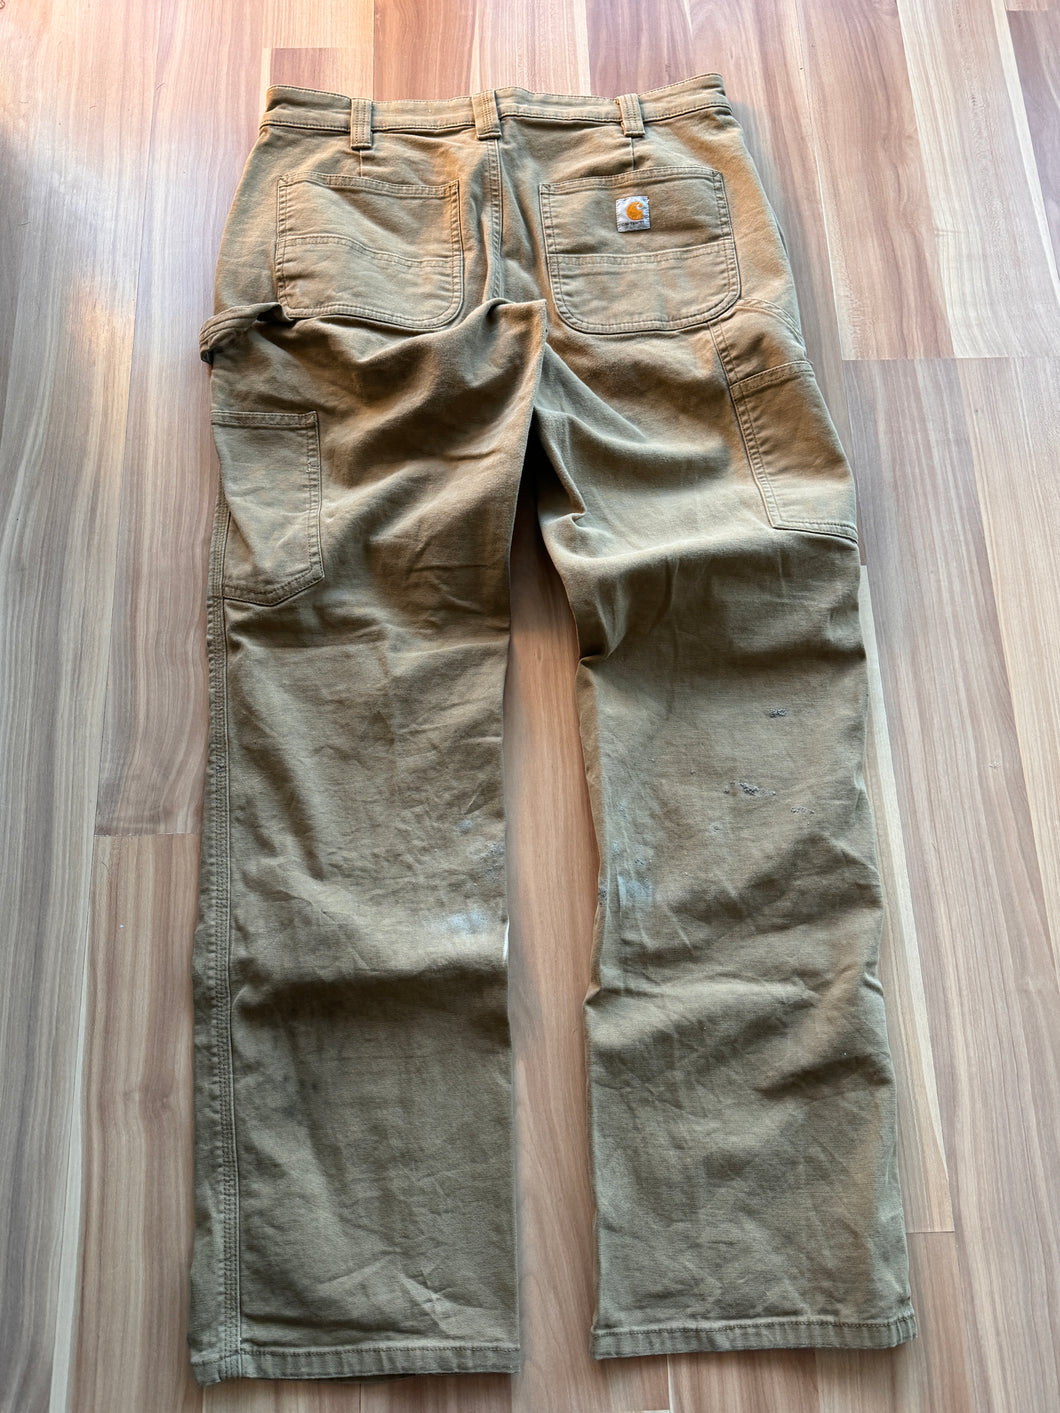 Carhartt Original Fit Pants - 32 x 31